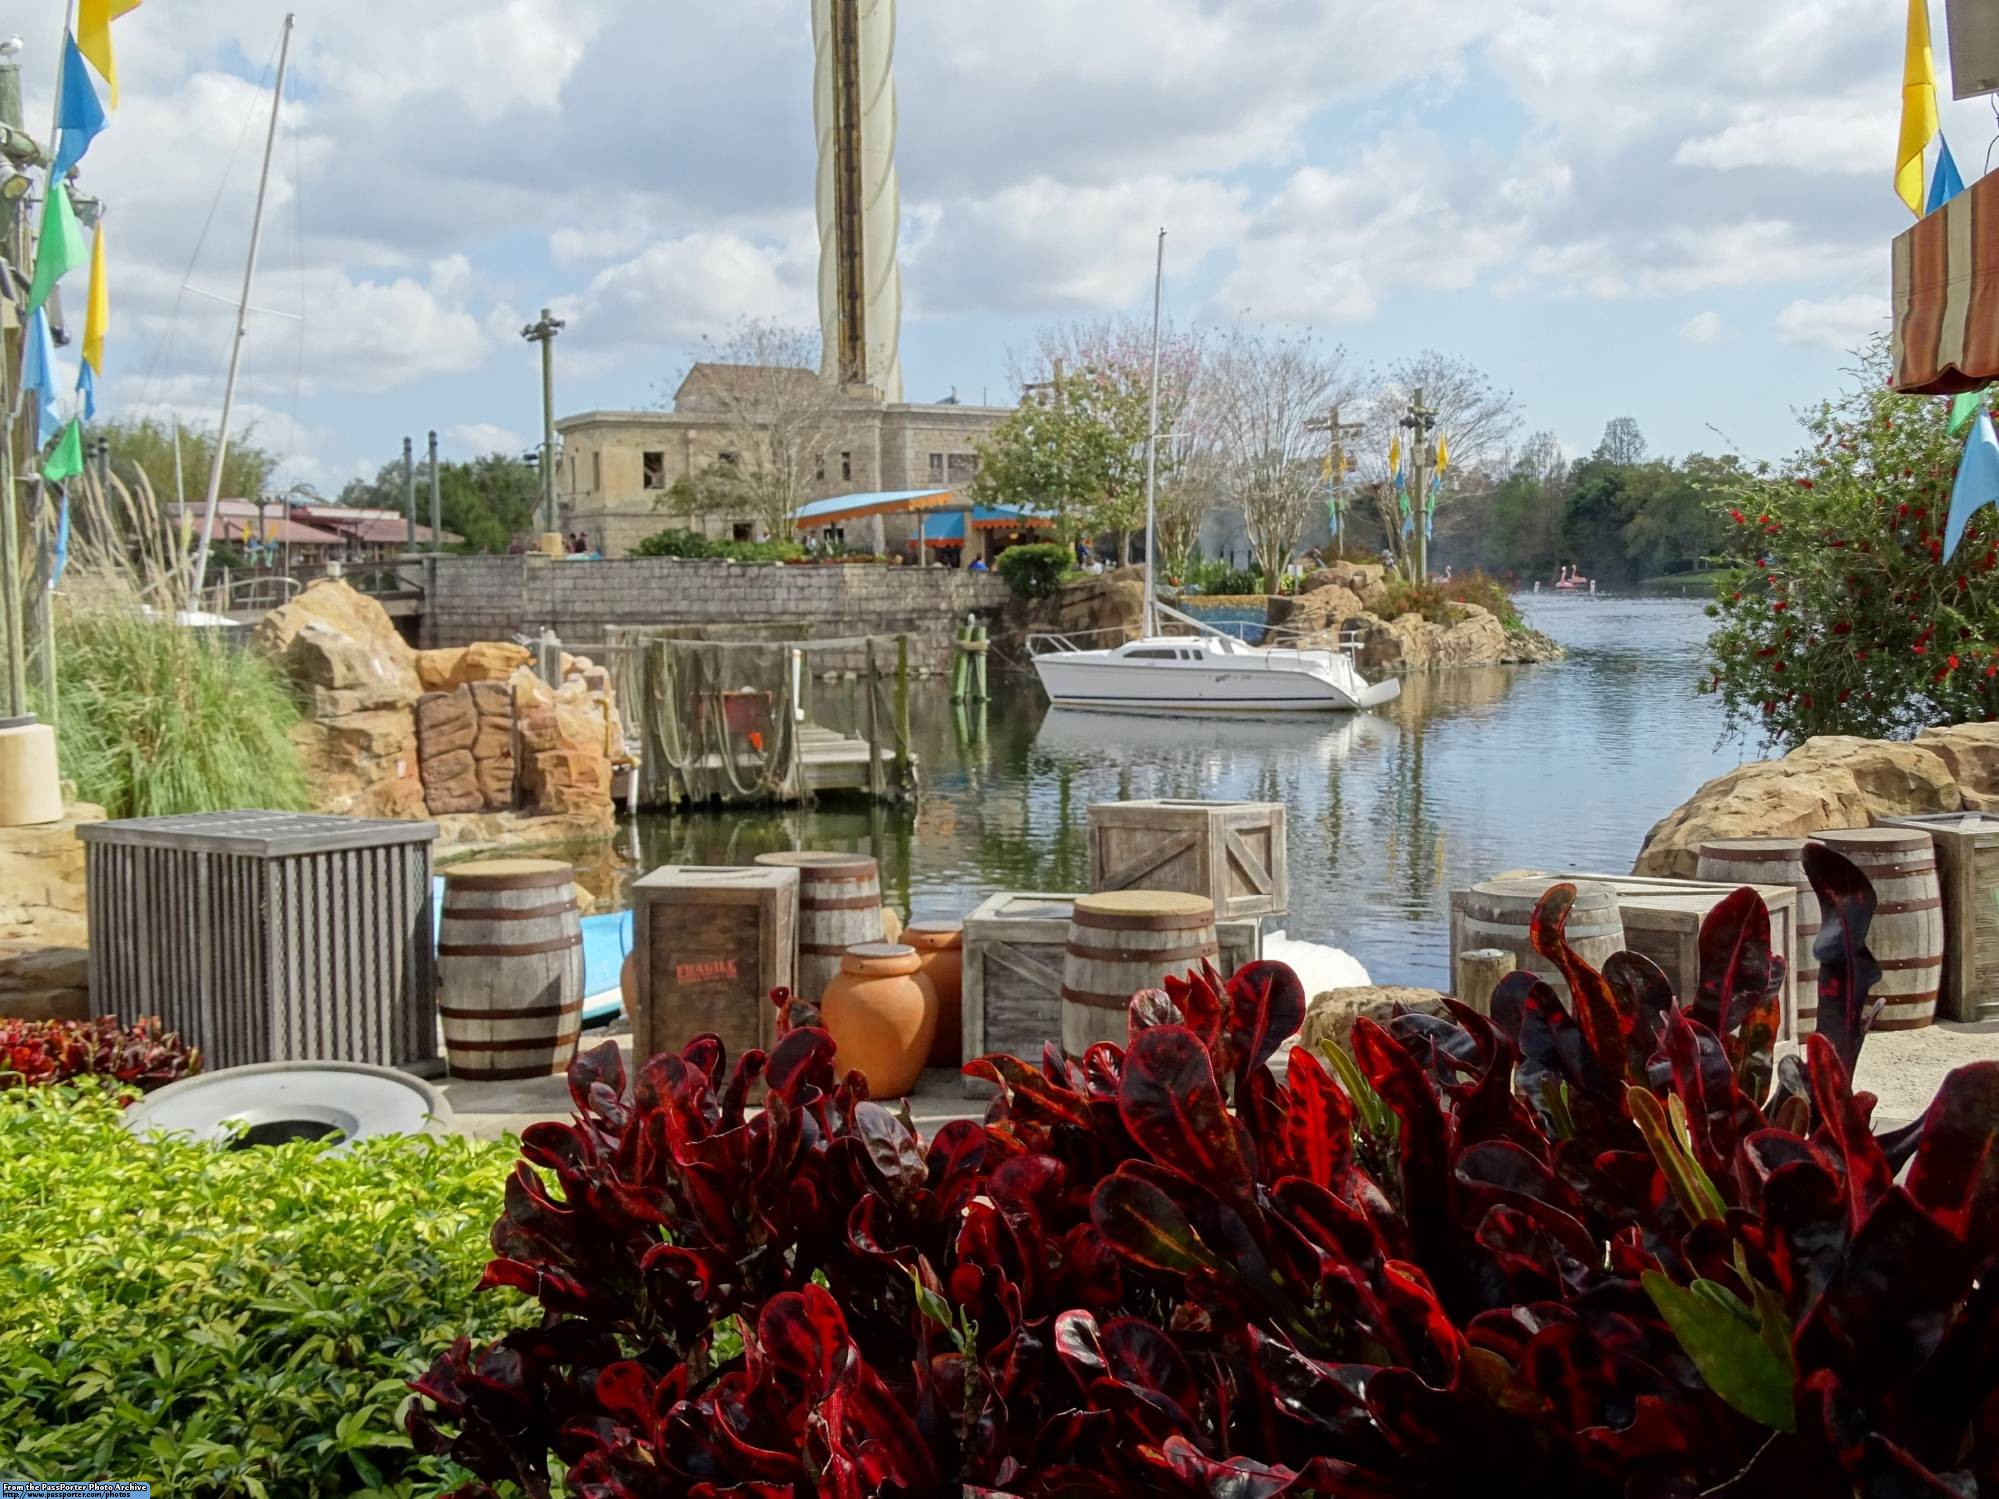 SeaWorld Orlando - main lake